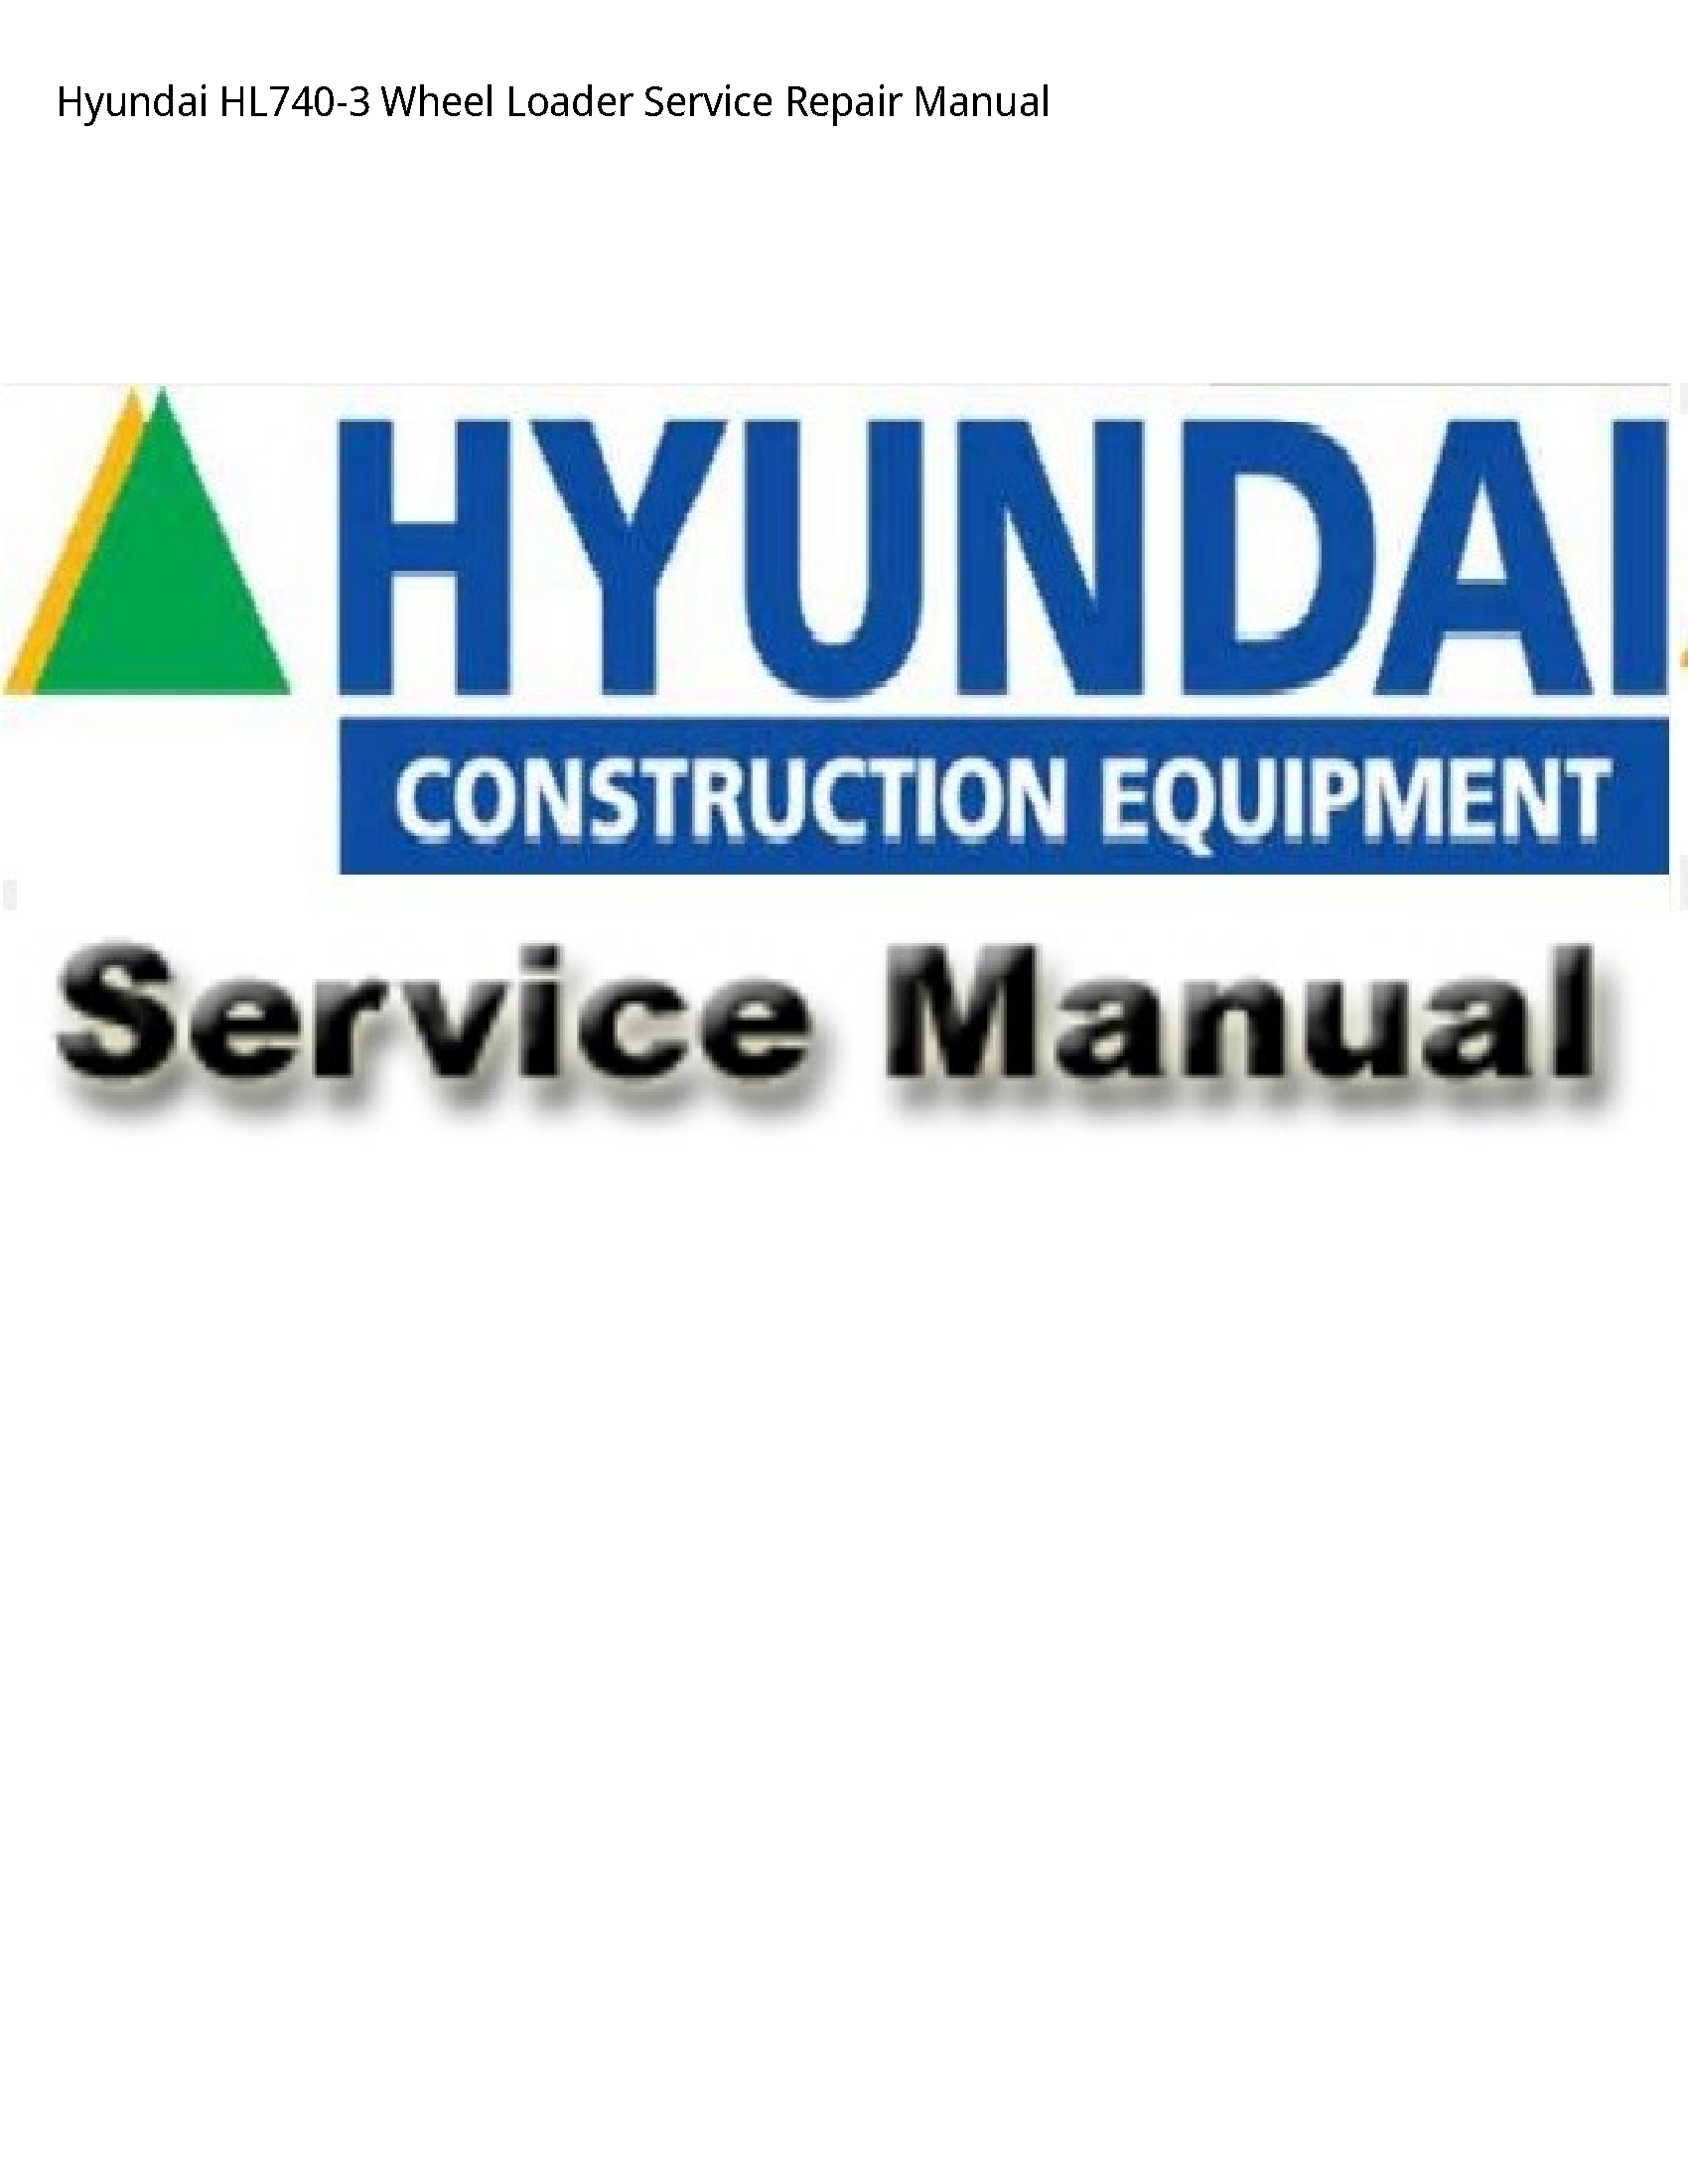 Hyundai HL740-3 Wheel Loader manual